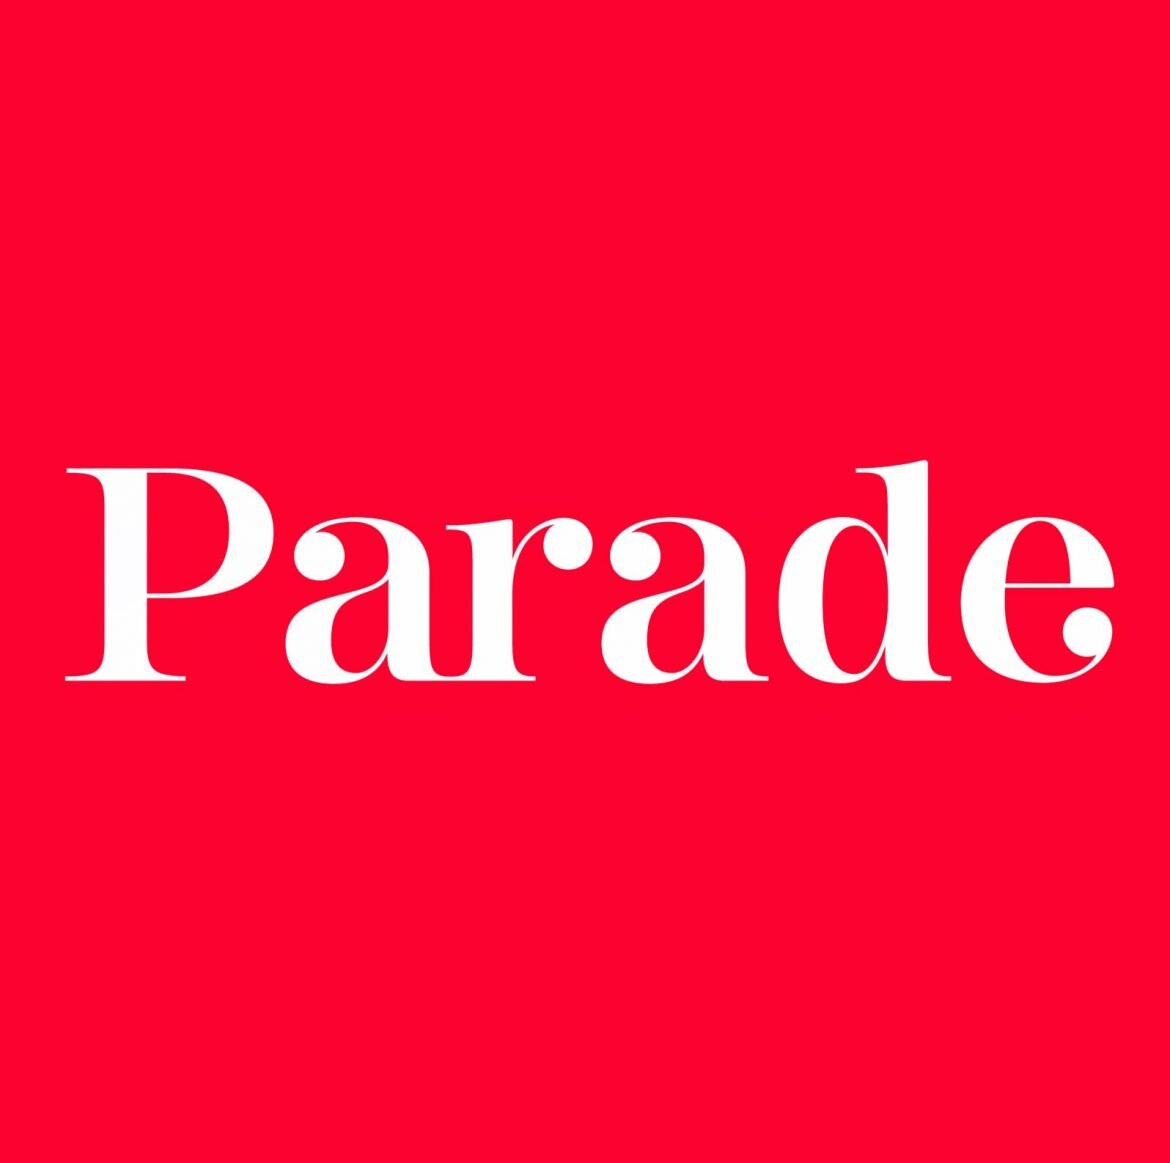 Revista Parade_Premier Charter School_Julie Frugo